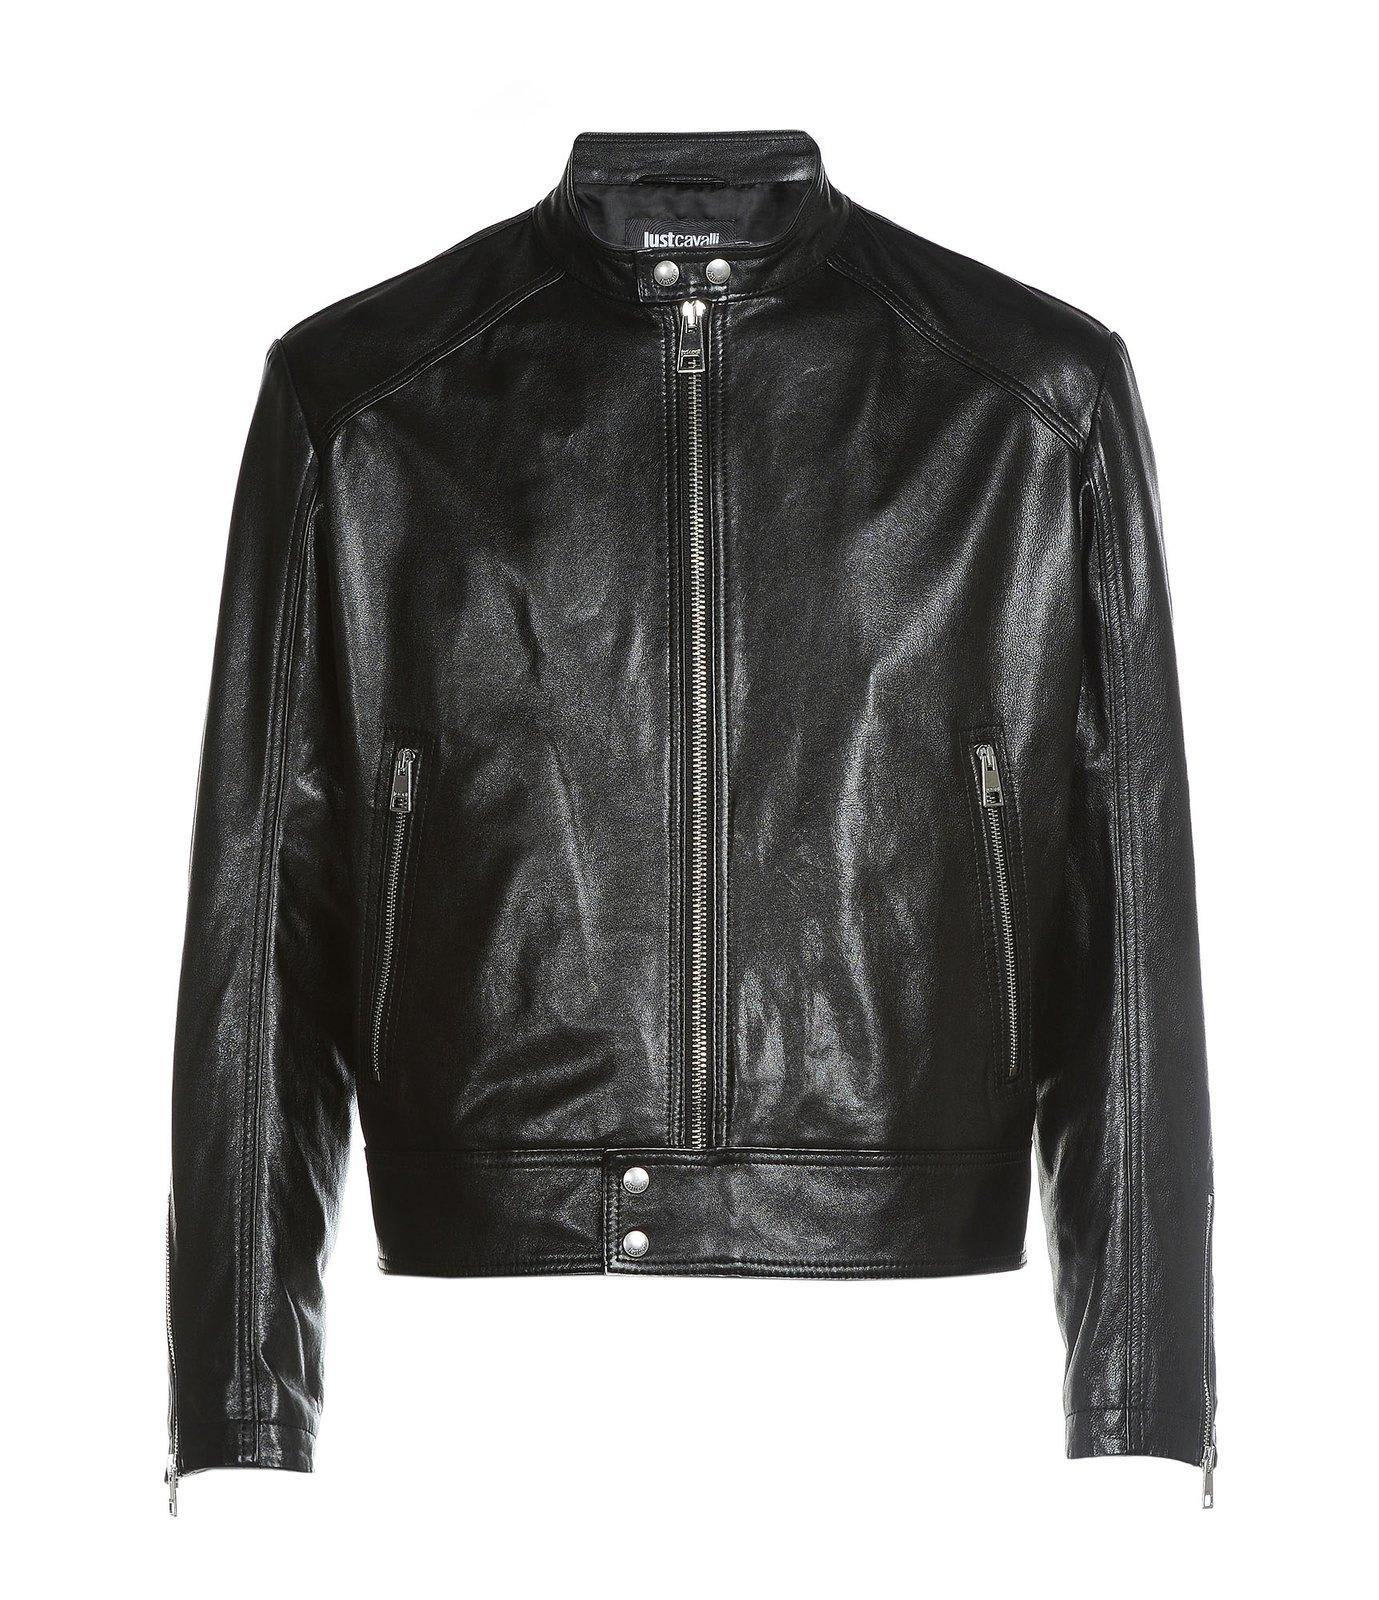 Just Cavalli Classic Zip-up Leather Jacket